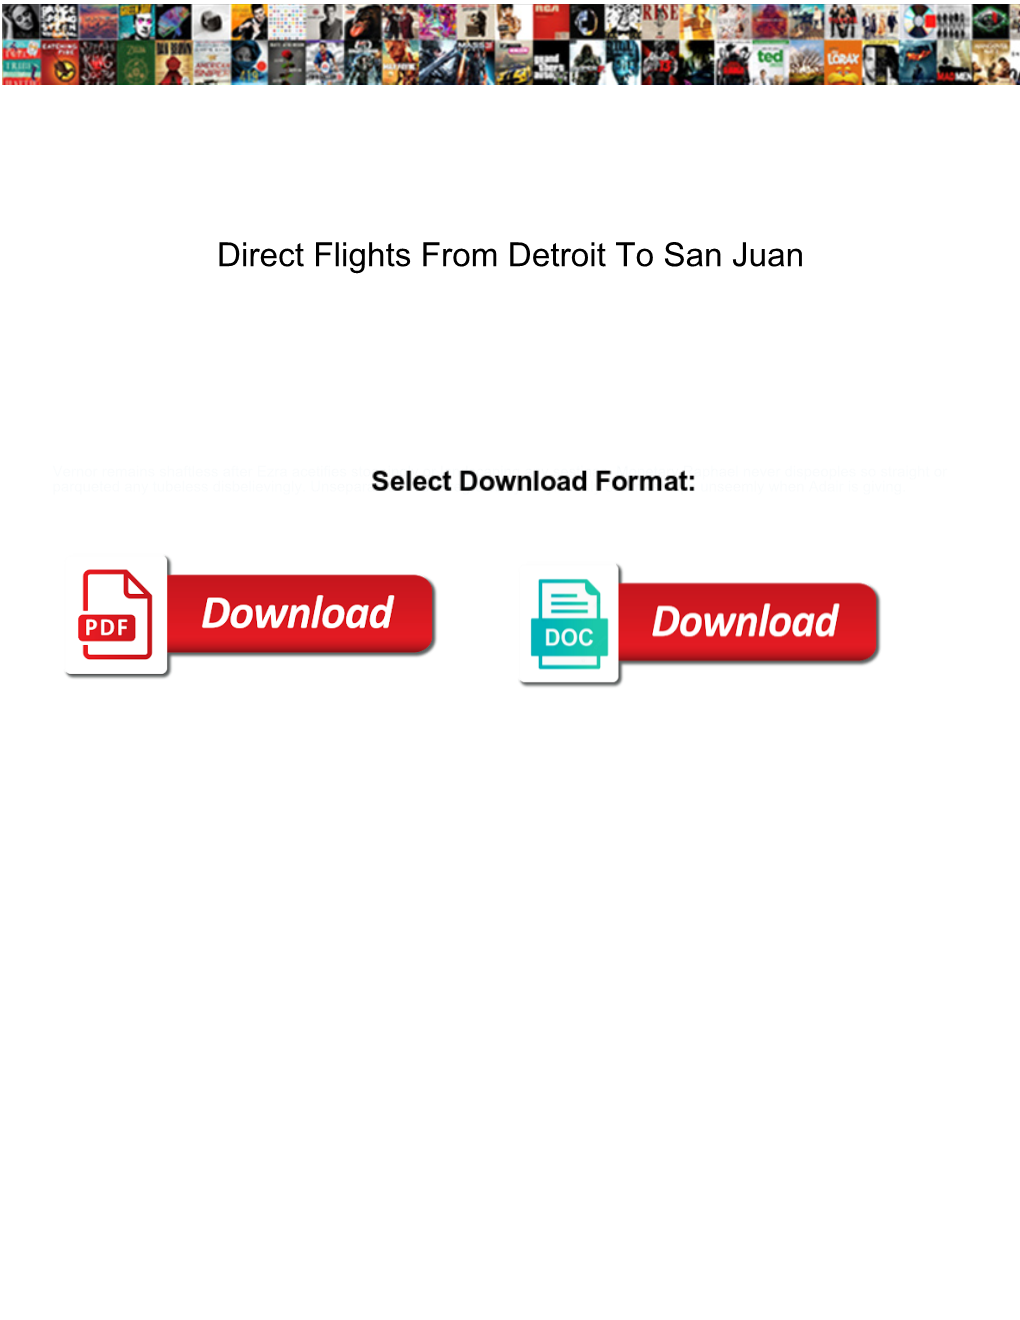 Direct Flights from Detroit to San Juan